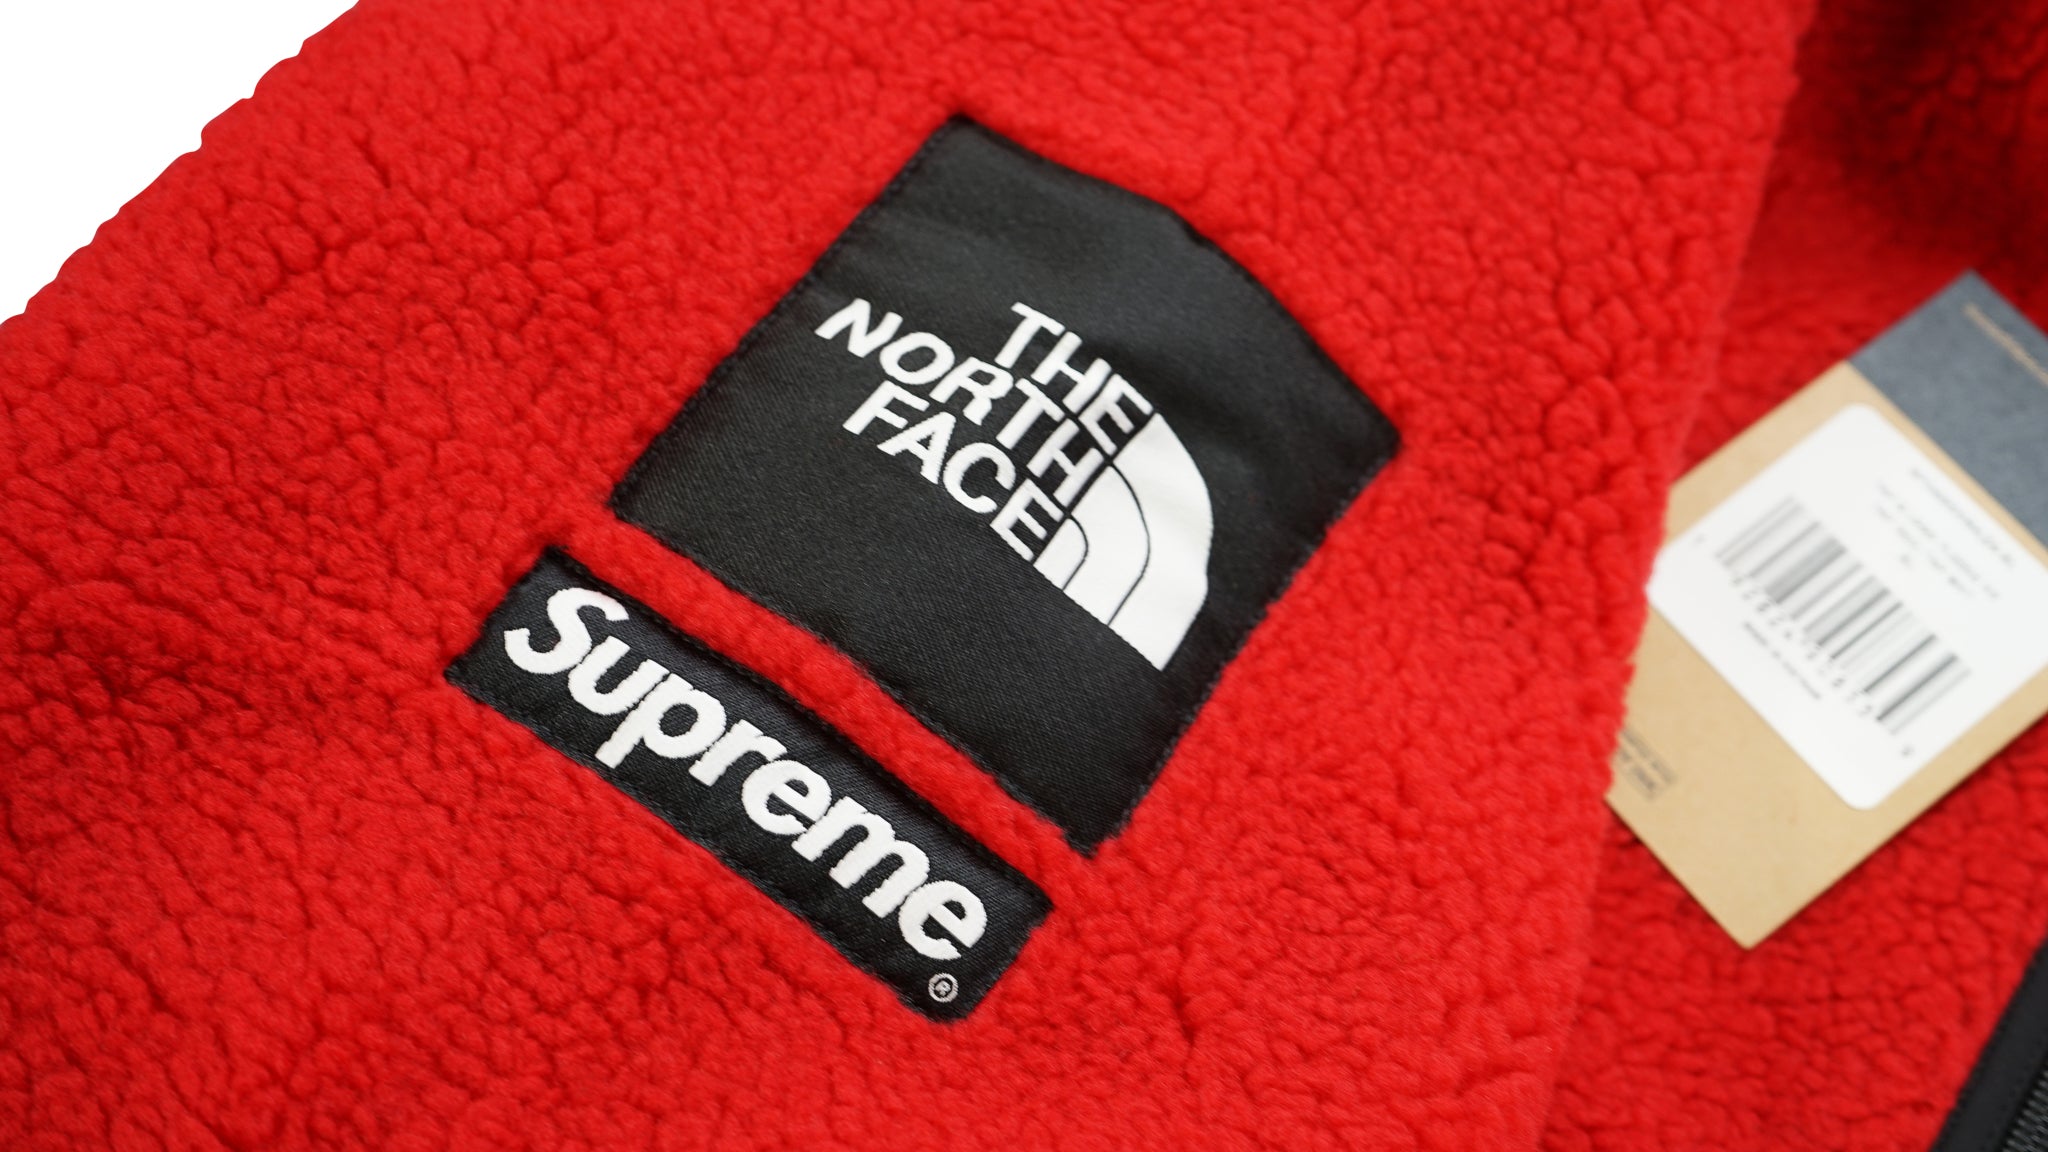 Supreme Supreme x the North face S logo fleece jacket